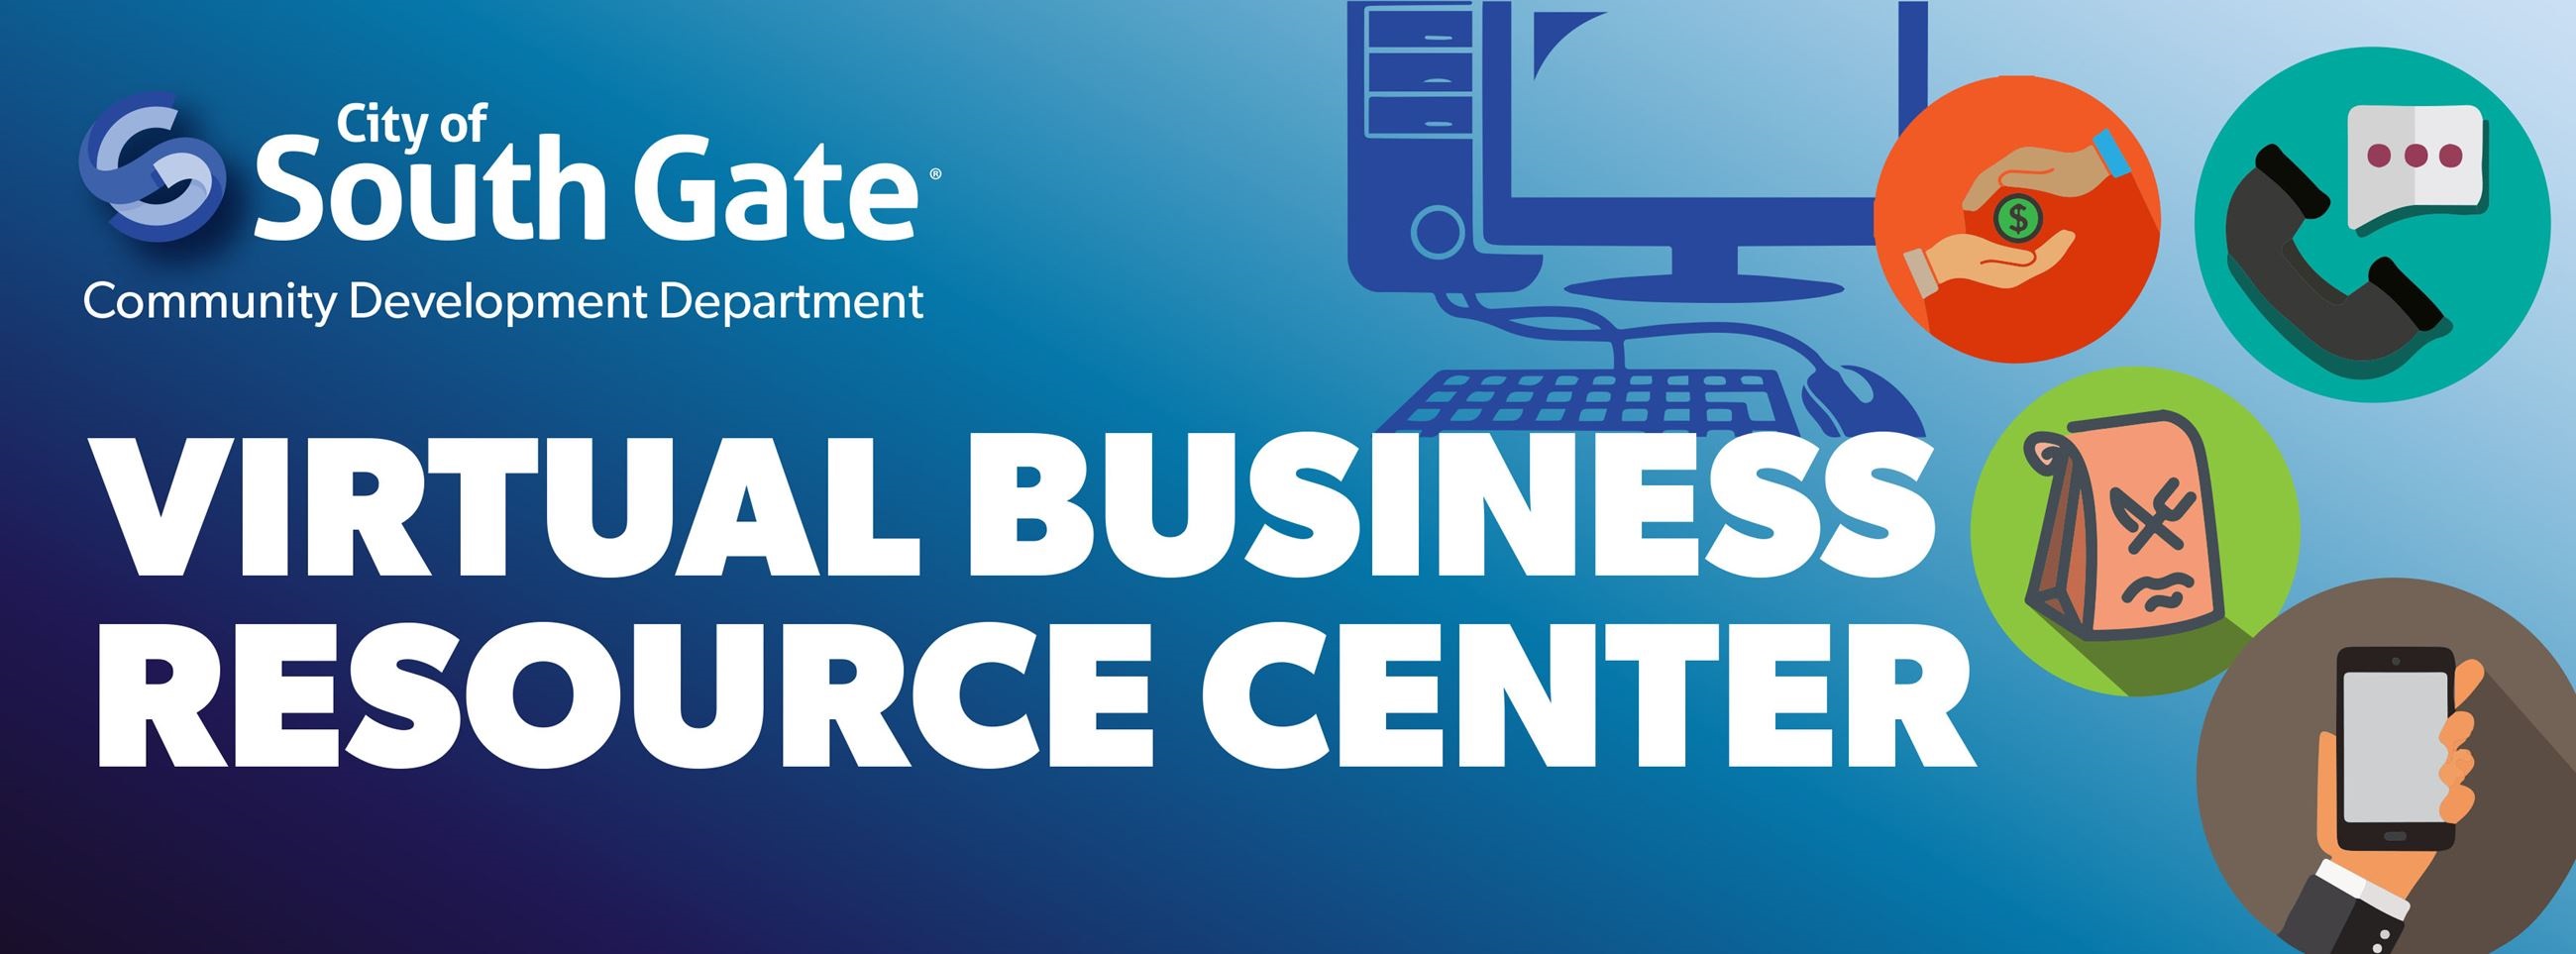 SG Virtual Business Resource Center header